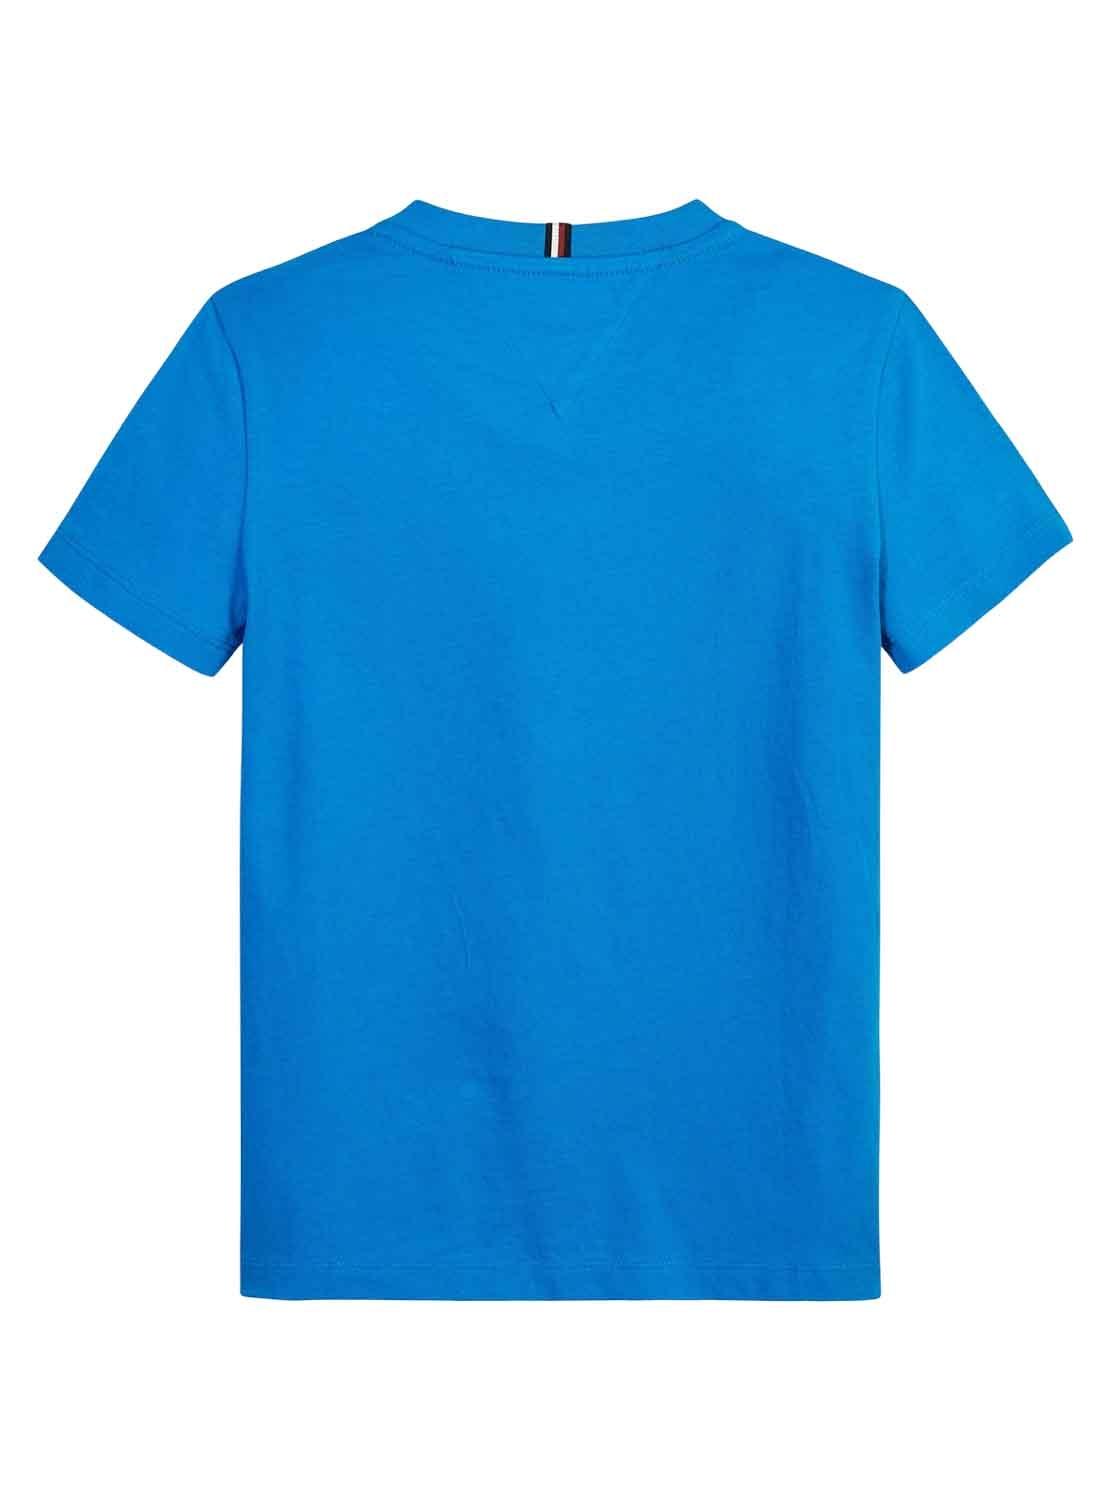 T-Shirt Tommy Hilfiger New York Flag Blu Bambino